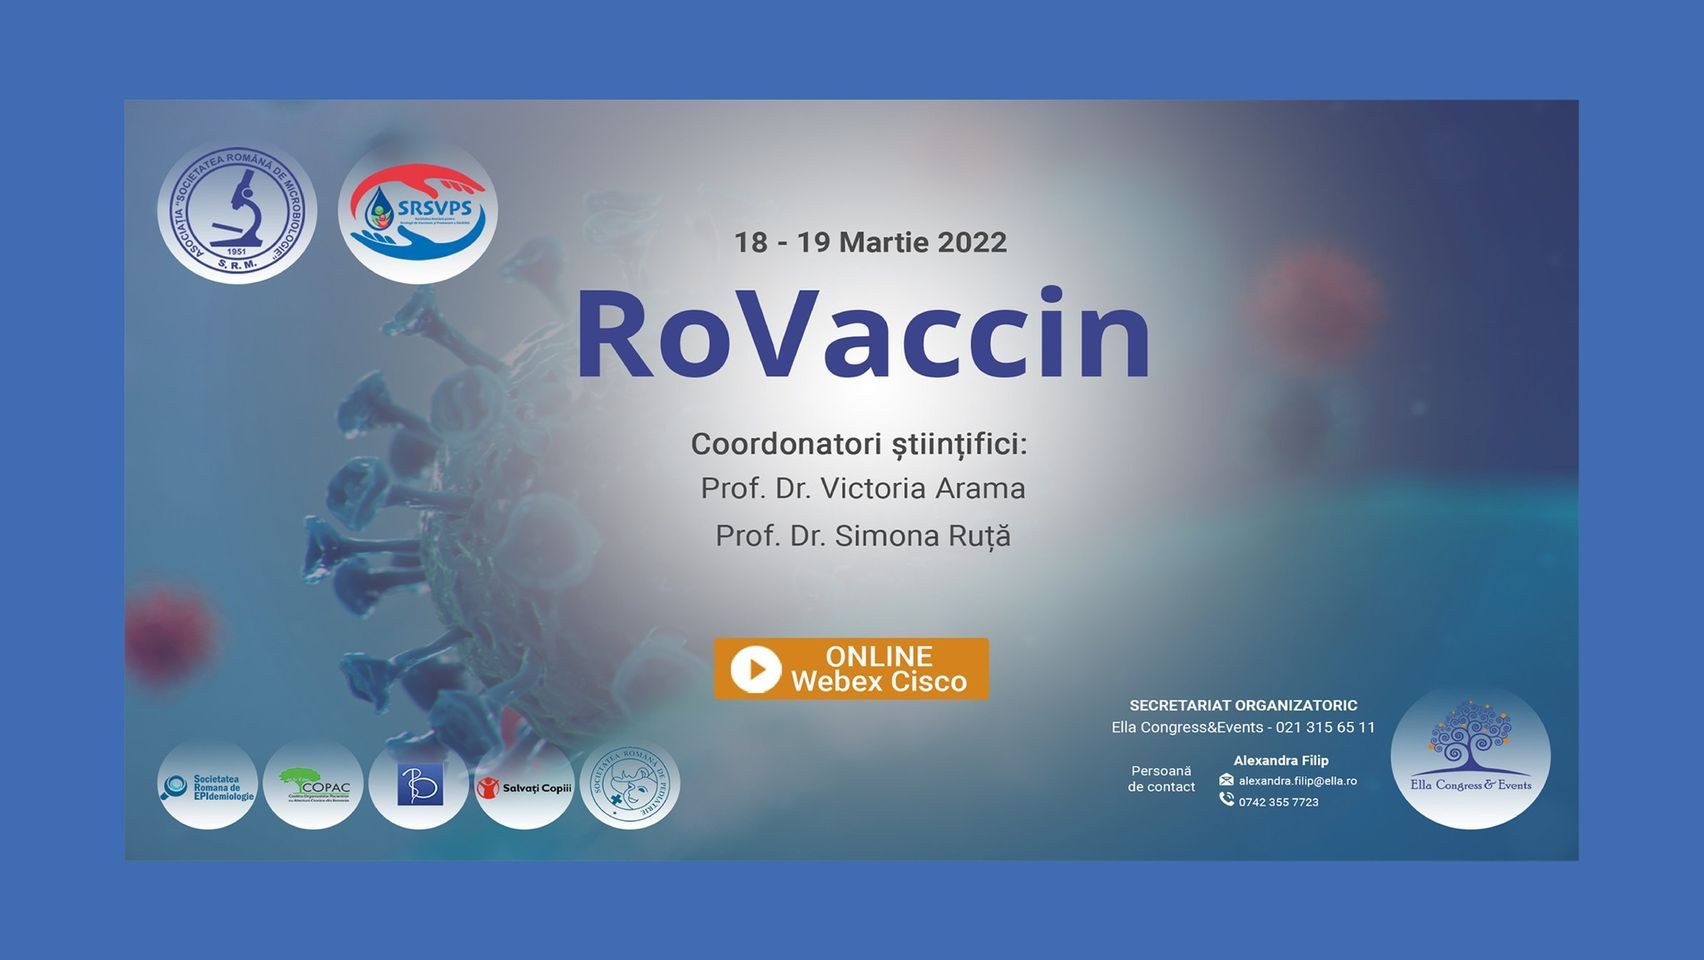 Conferința RoVaccin are loc în martie